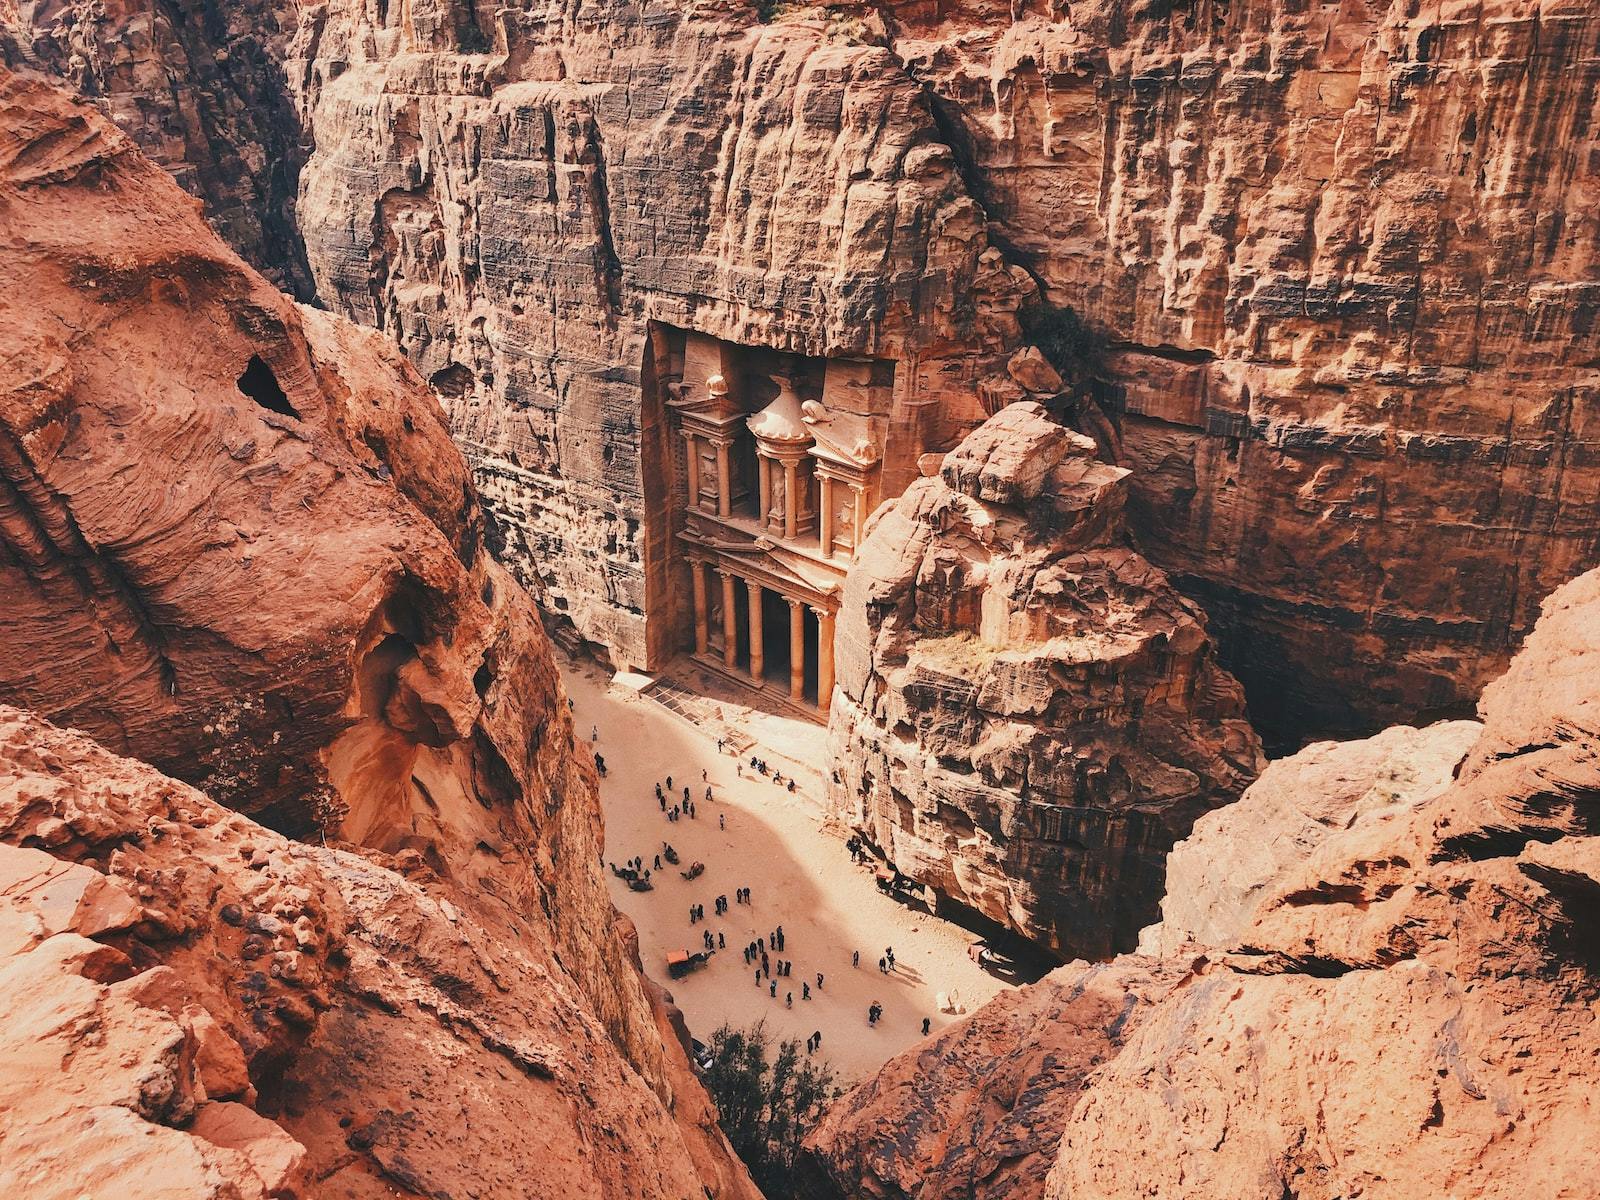 Your dream trip to Jordan